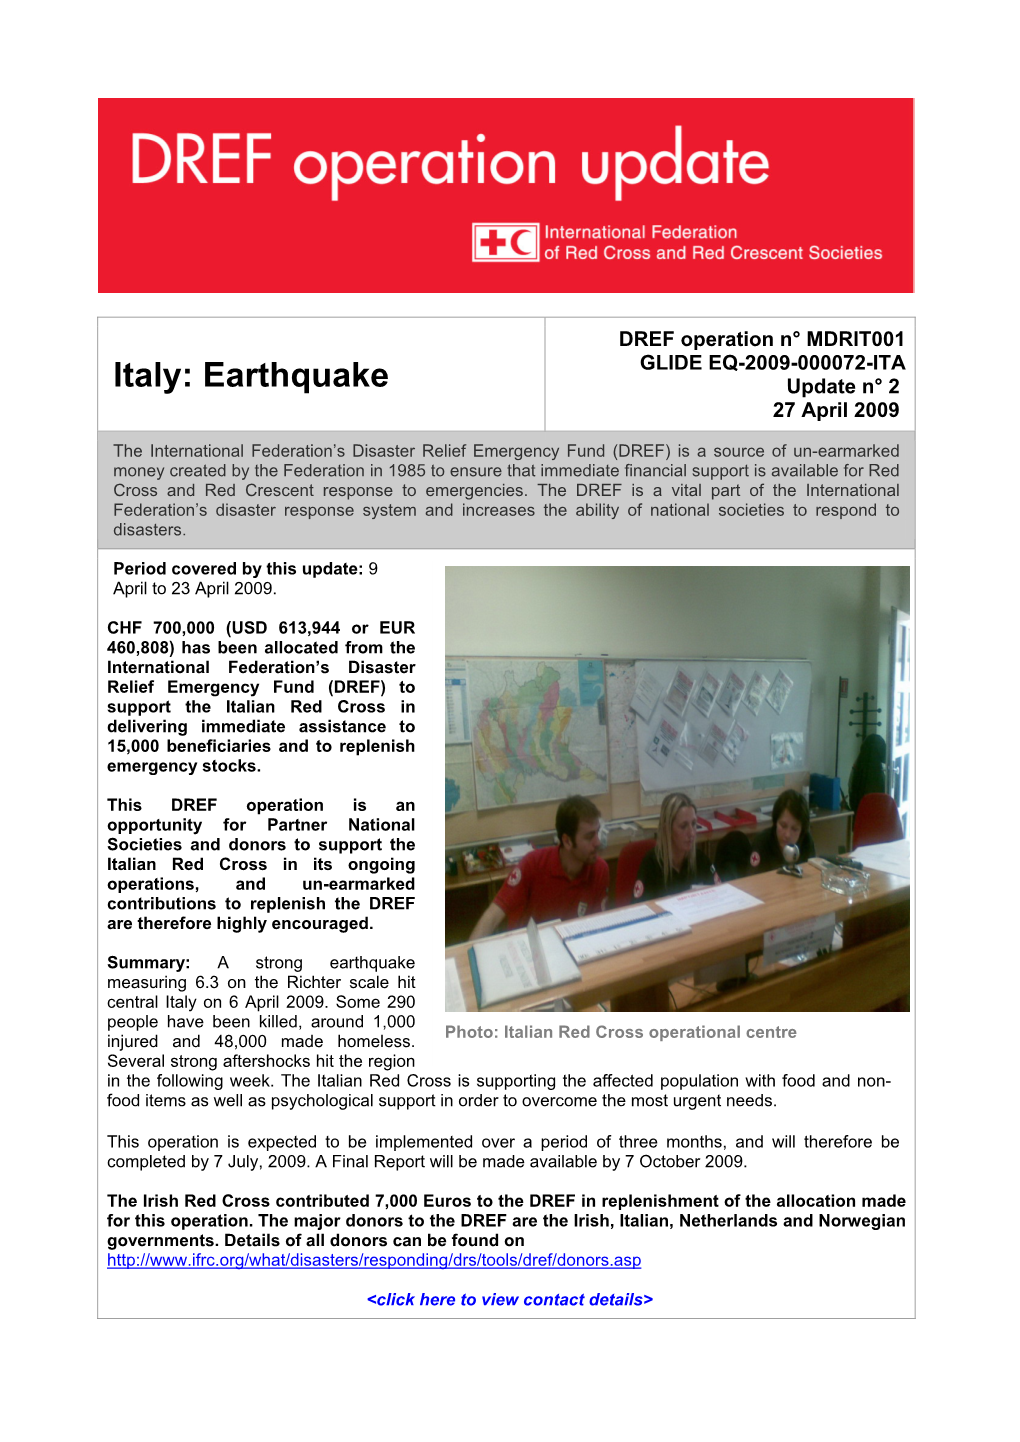 Italy: Earthquake Update N° 2 27 April 2009